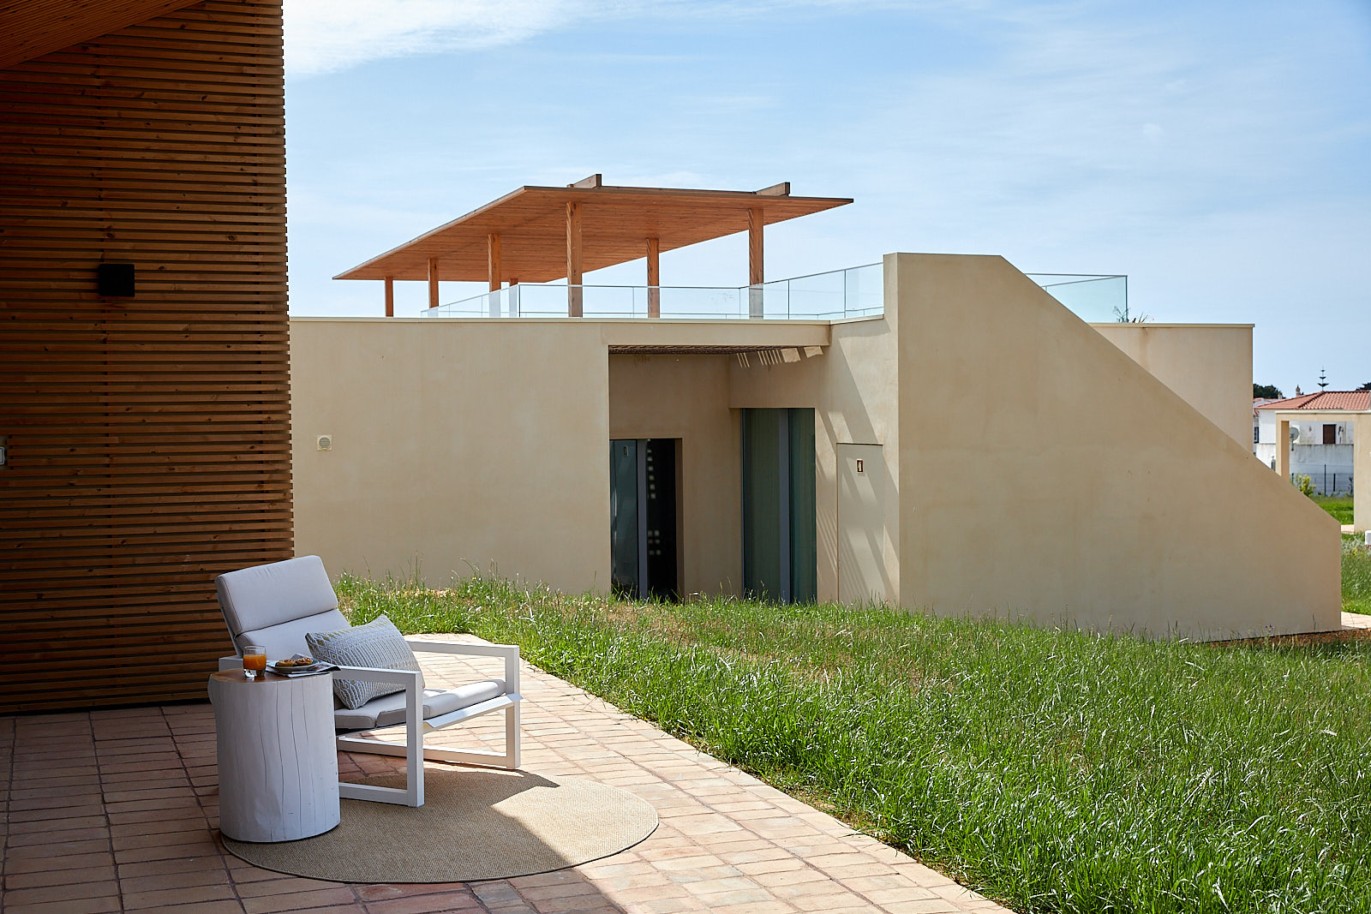 3 bedroom apartment in resort, for sale in Porches, Algarve_228611